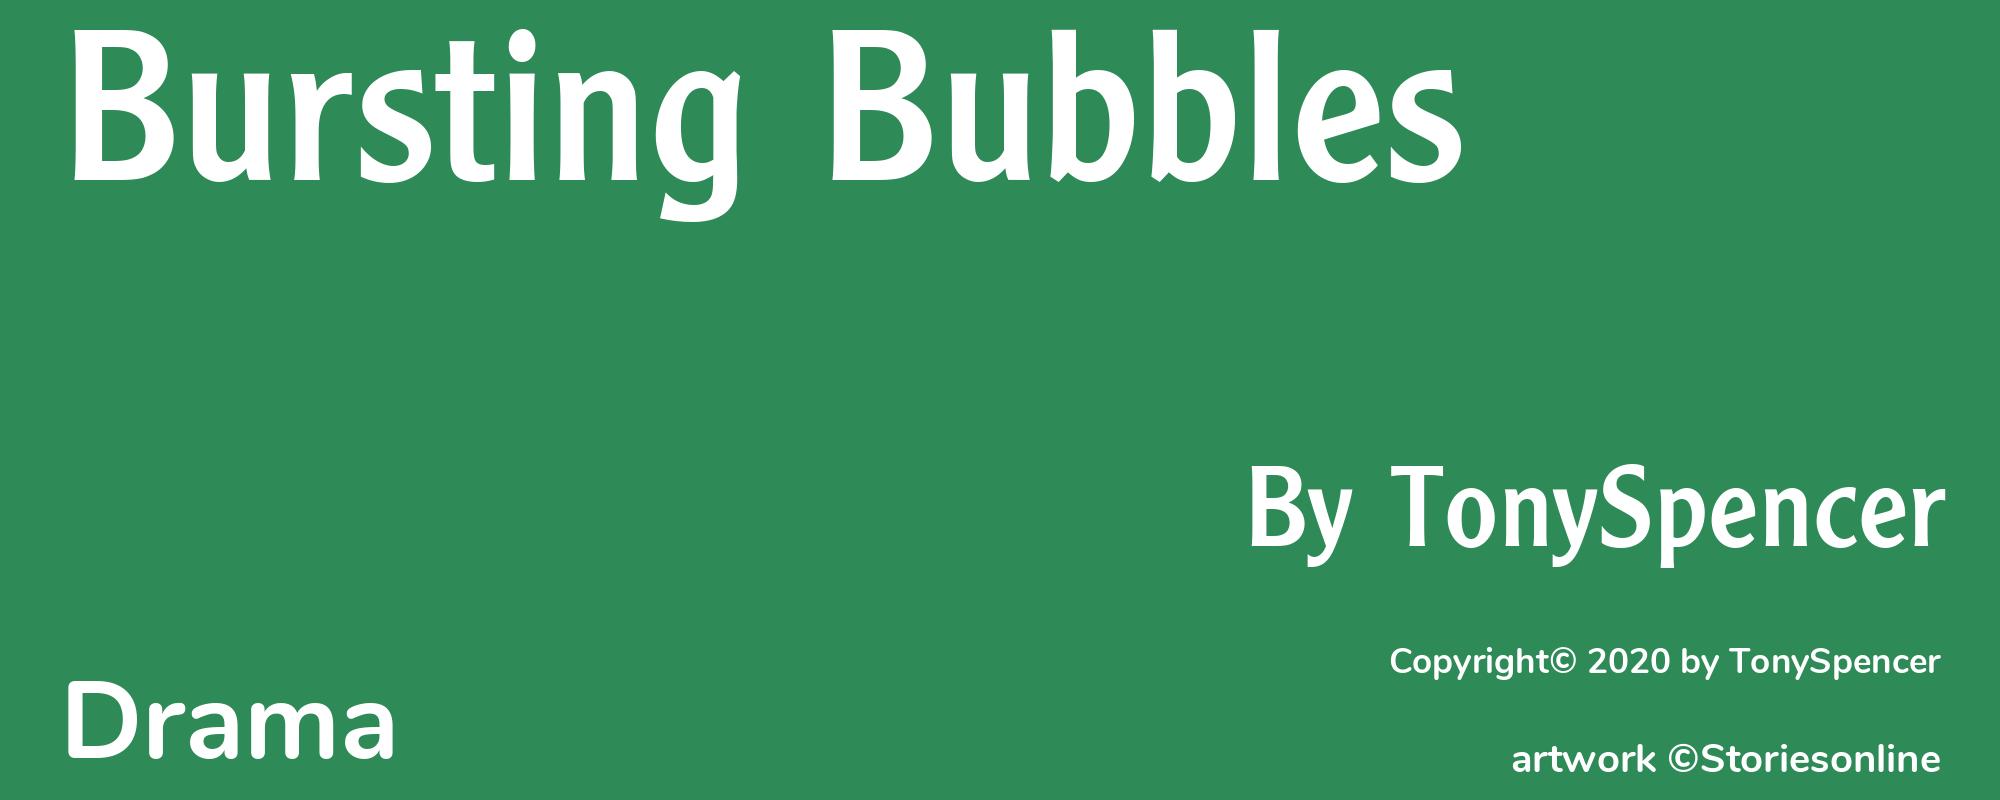 Bursting Bubbles - Cover